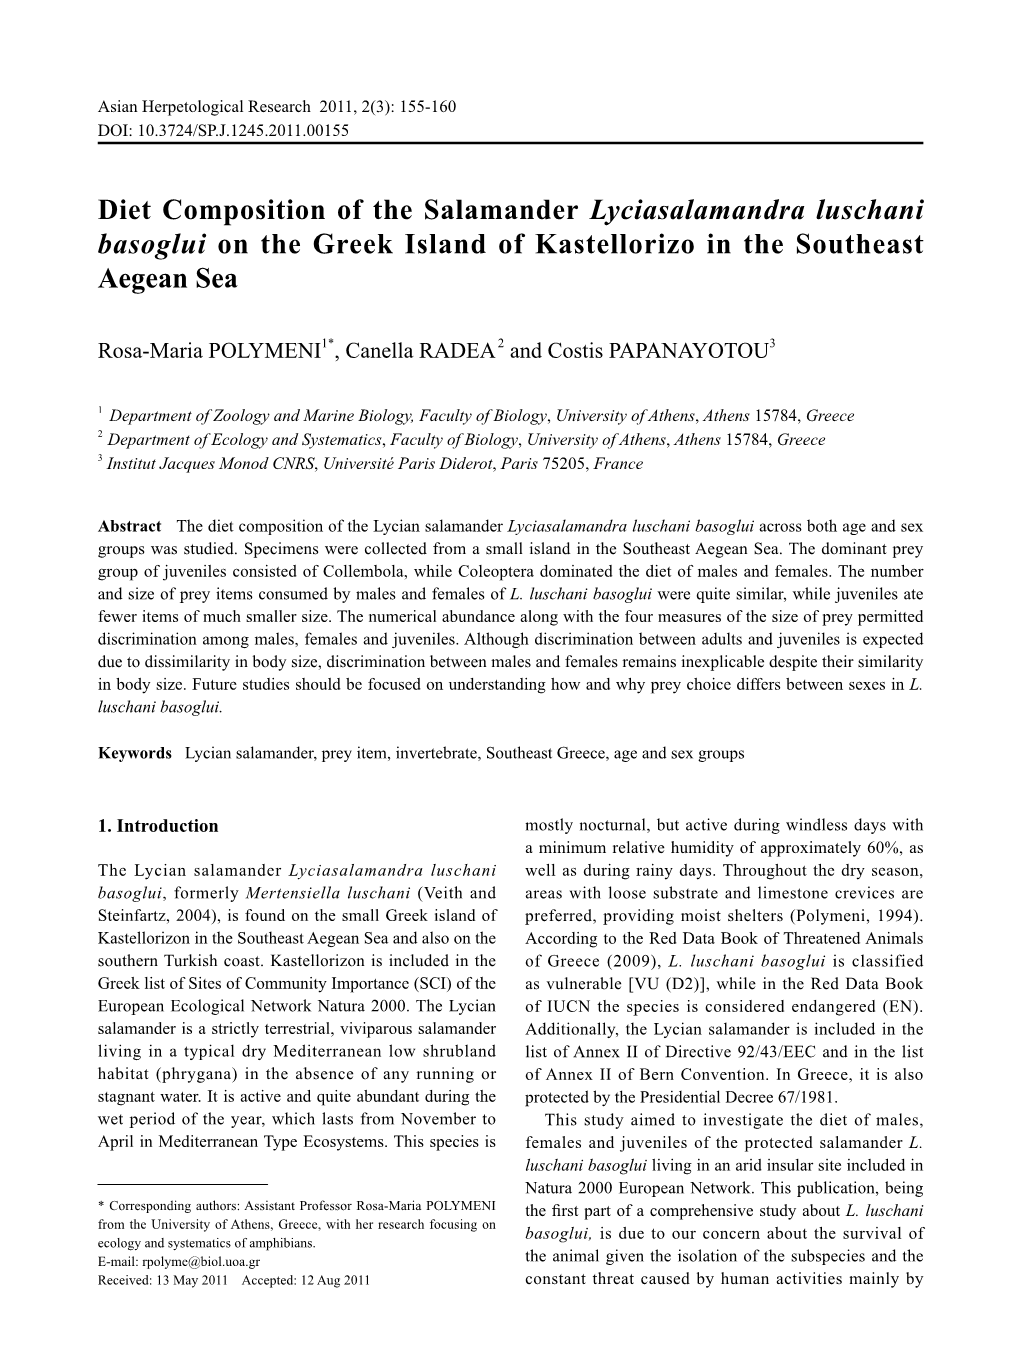 Diet Composition of the Salamander Lyciasalamandra Luschani Basoglui on the Greek Island of Kastellorizo in the Southeast Aegean Sea